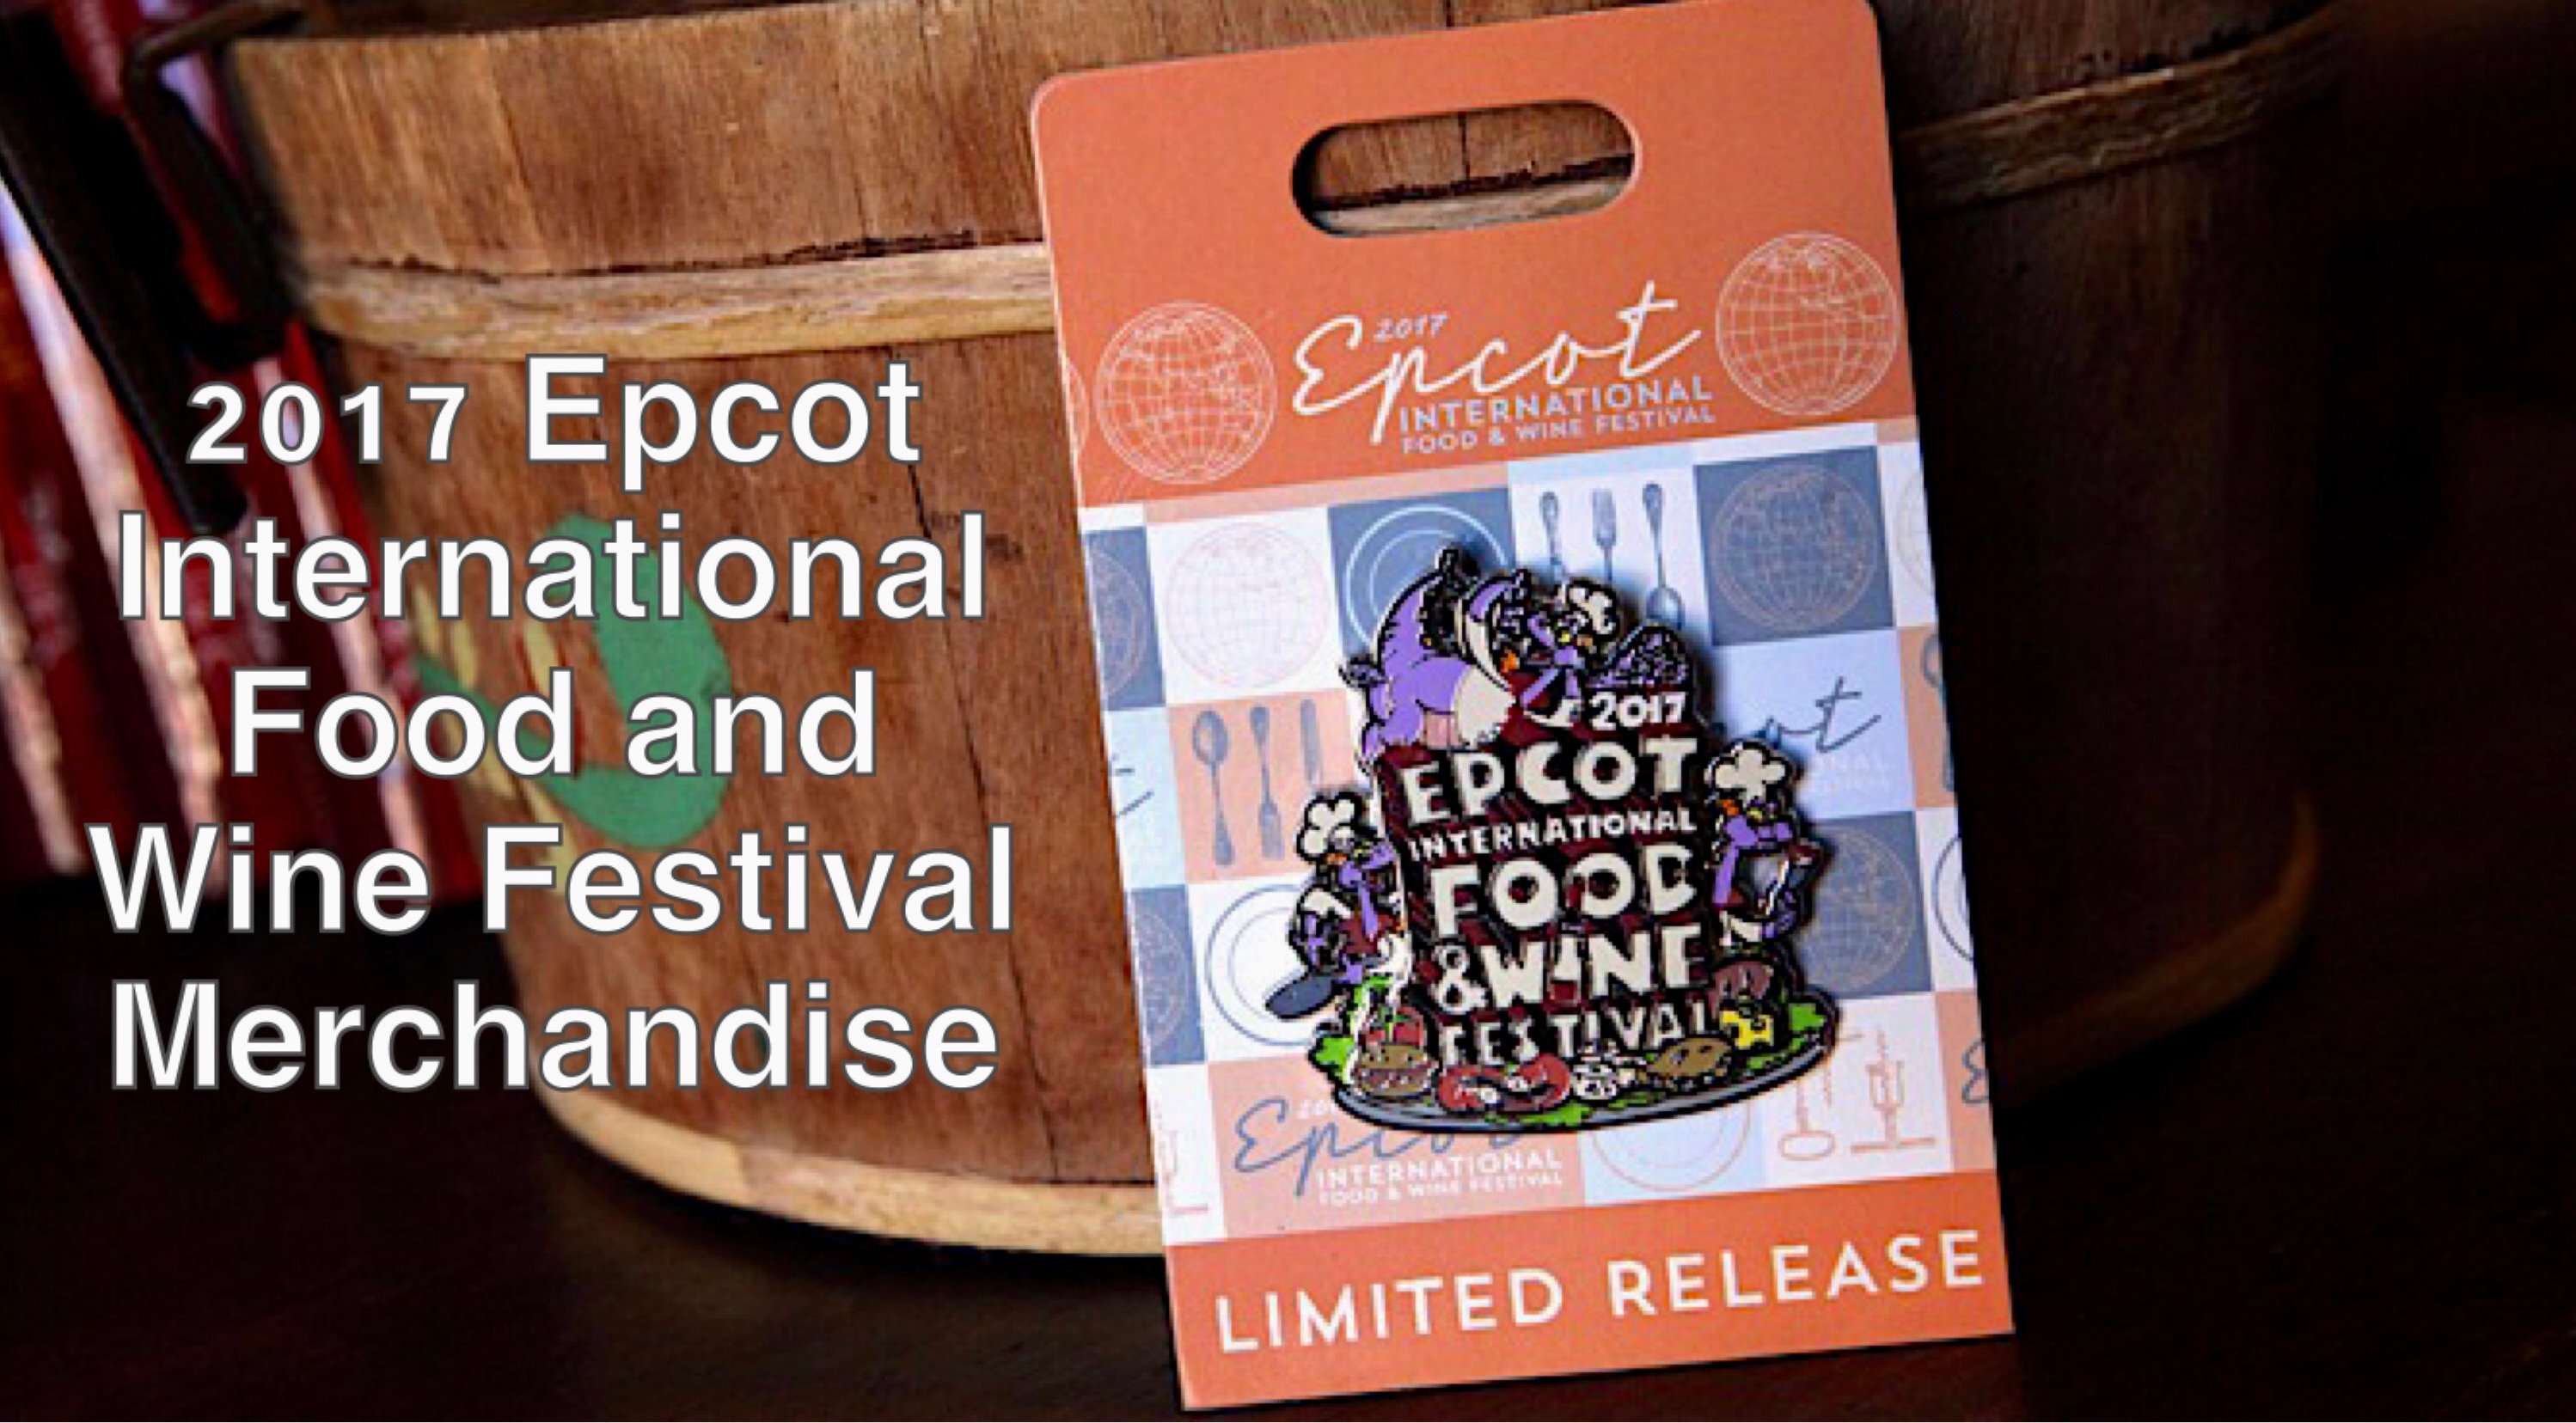 2017 Epcot International Food and Wine Festival Merchandise